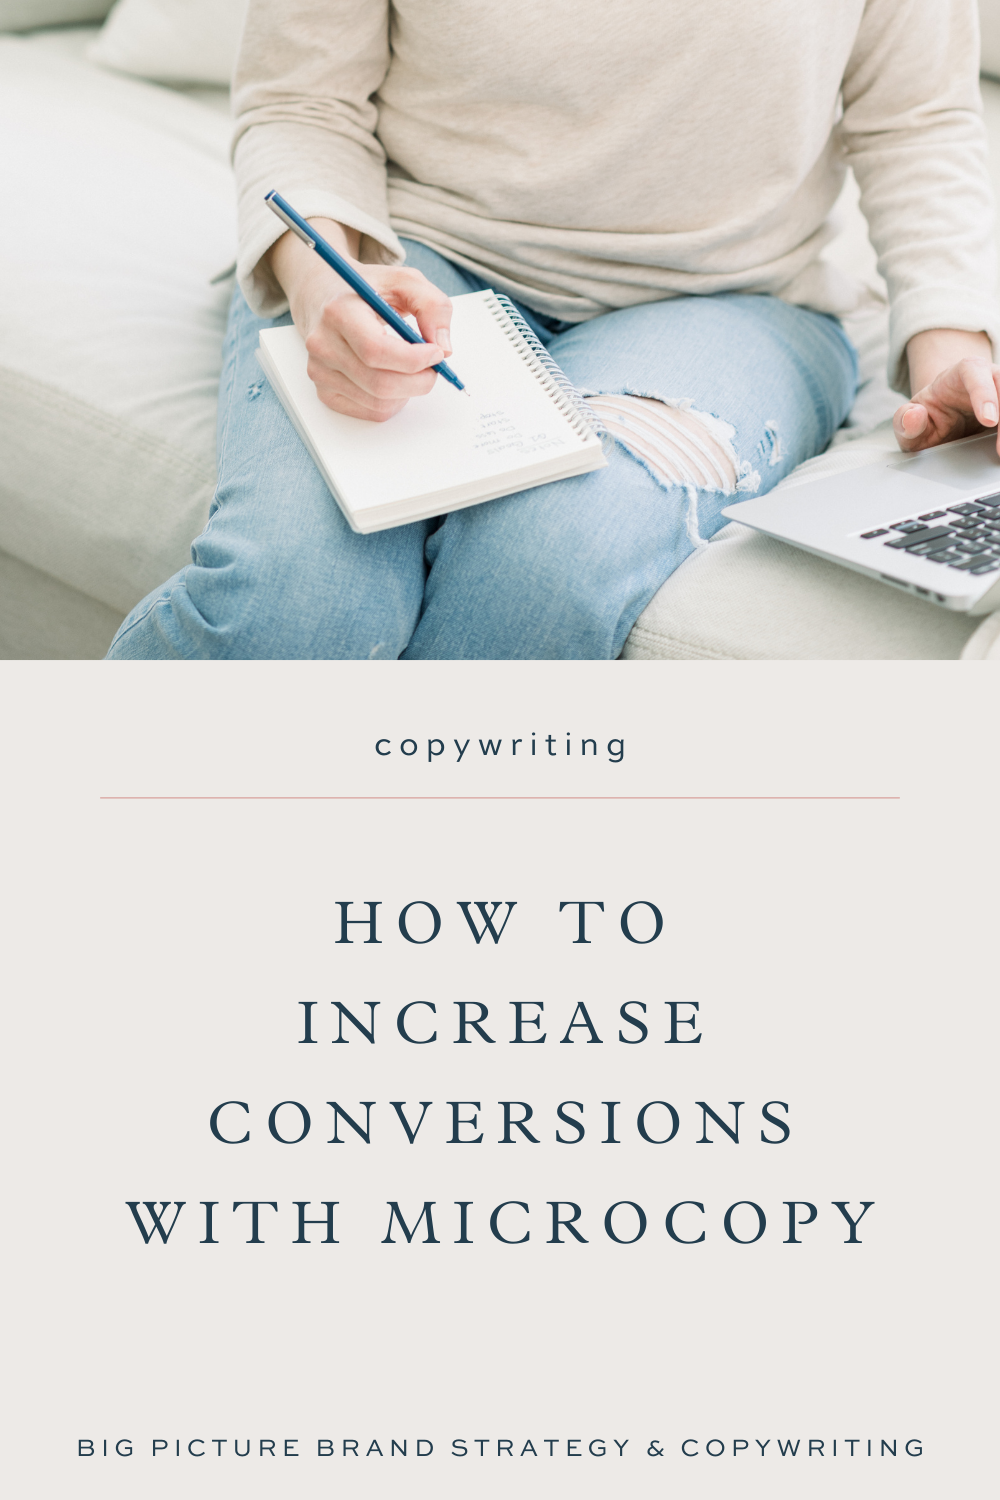 Guide to microcopy